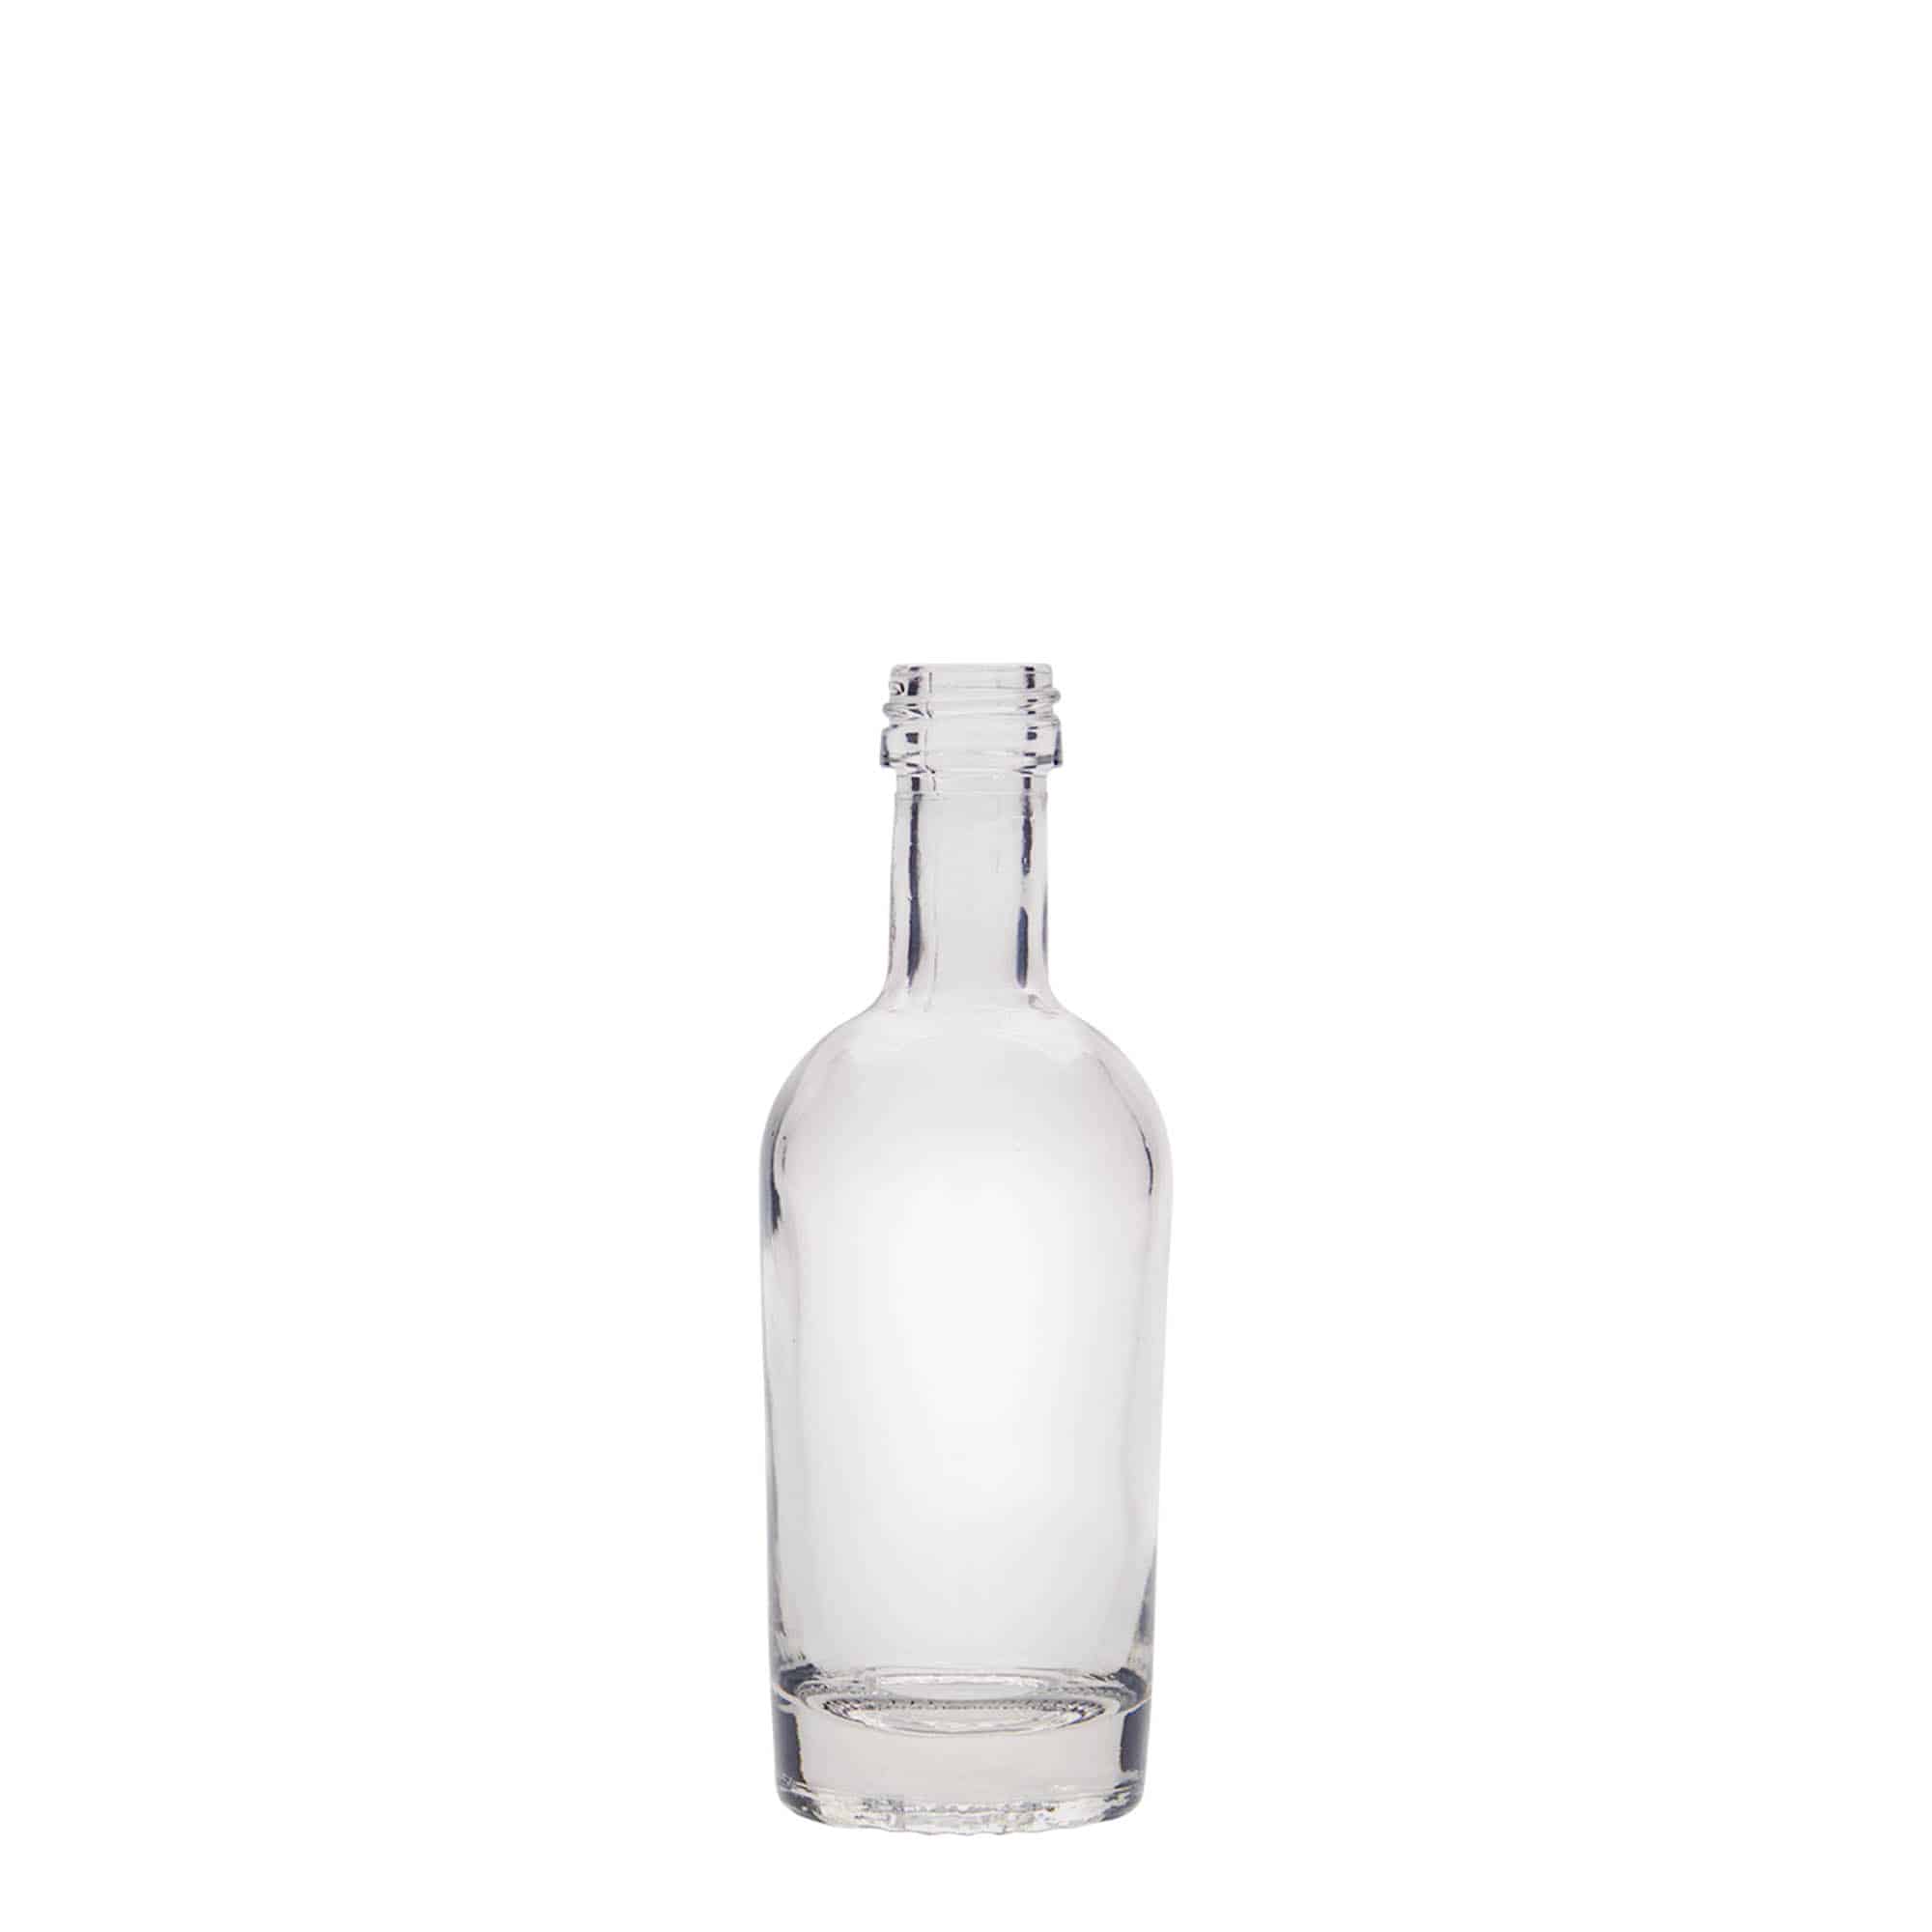 50 ml glass bottle 'Pepe', closure: PP 18